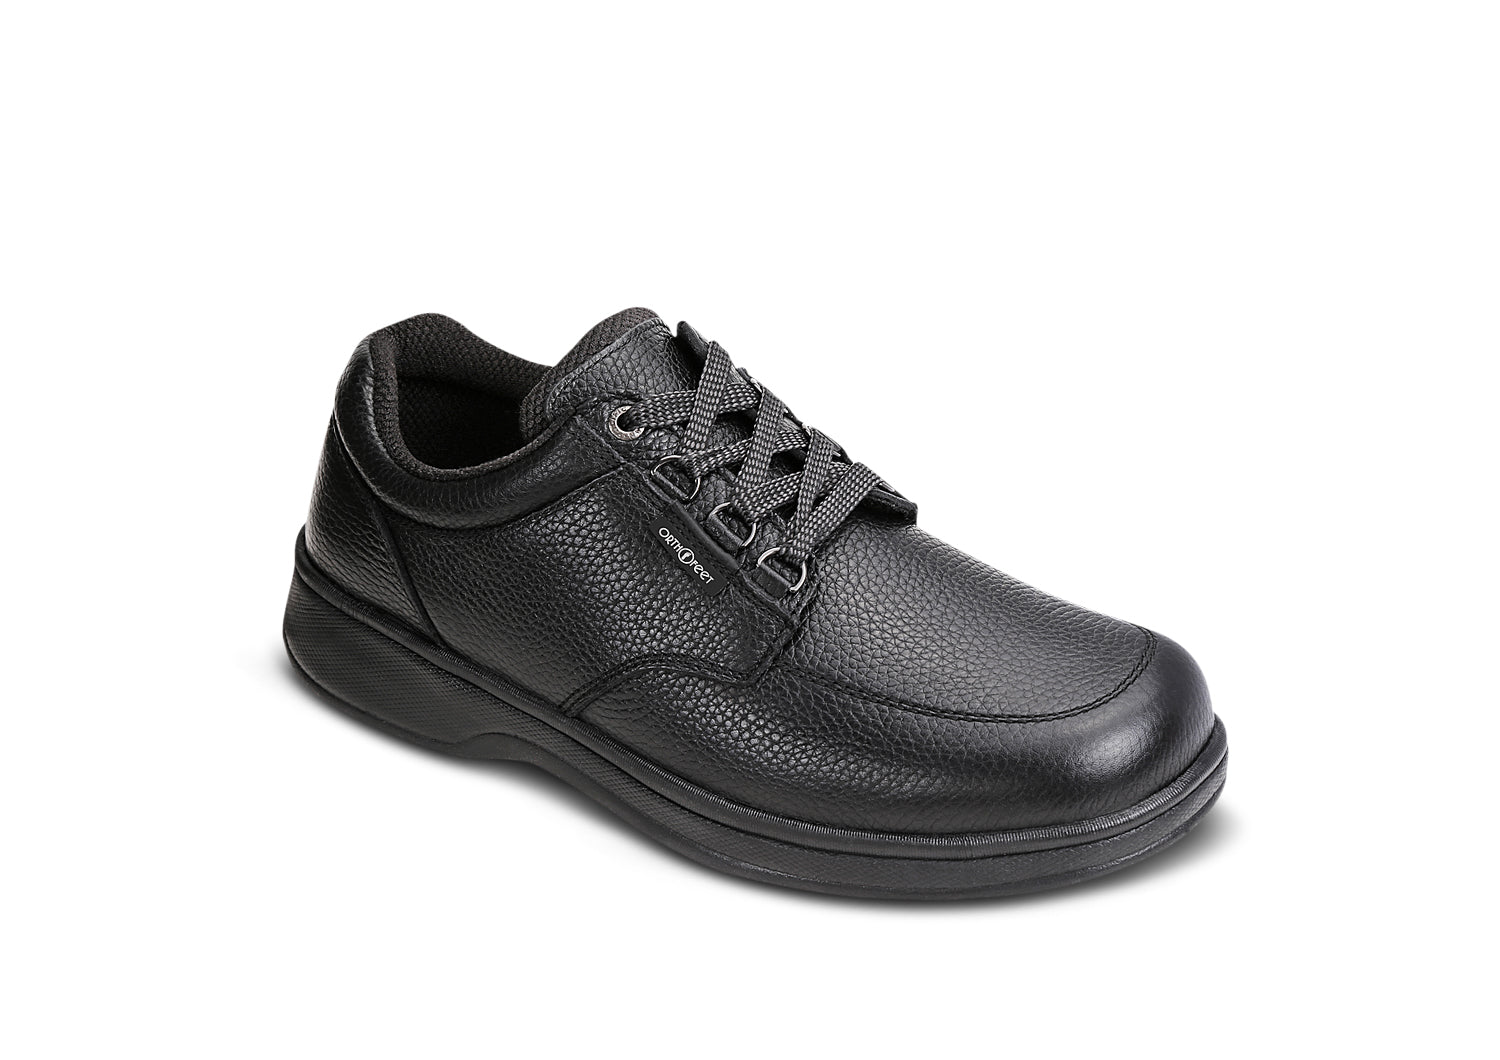 Avery Island Black Men's Orthopedic Comfort Shoes | OrthoFeet